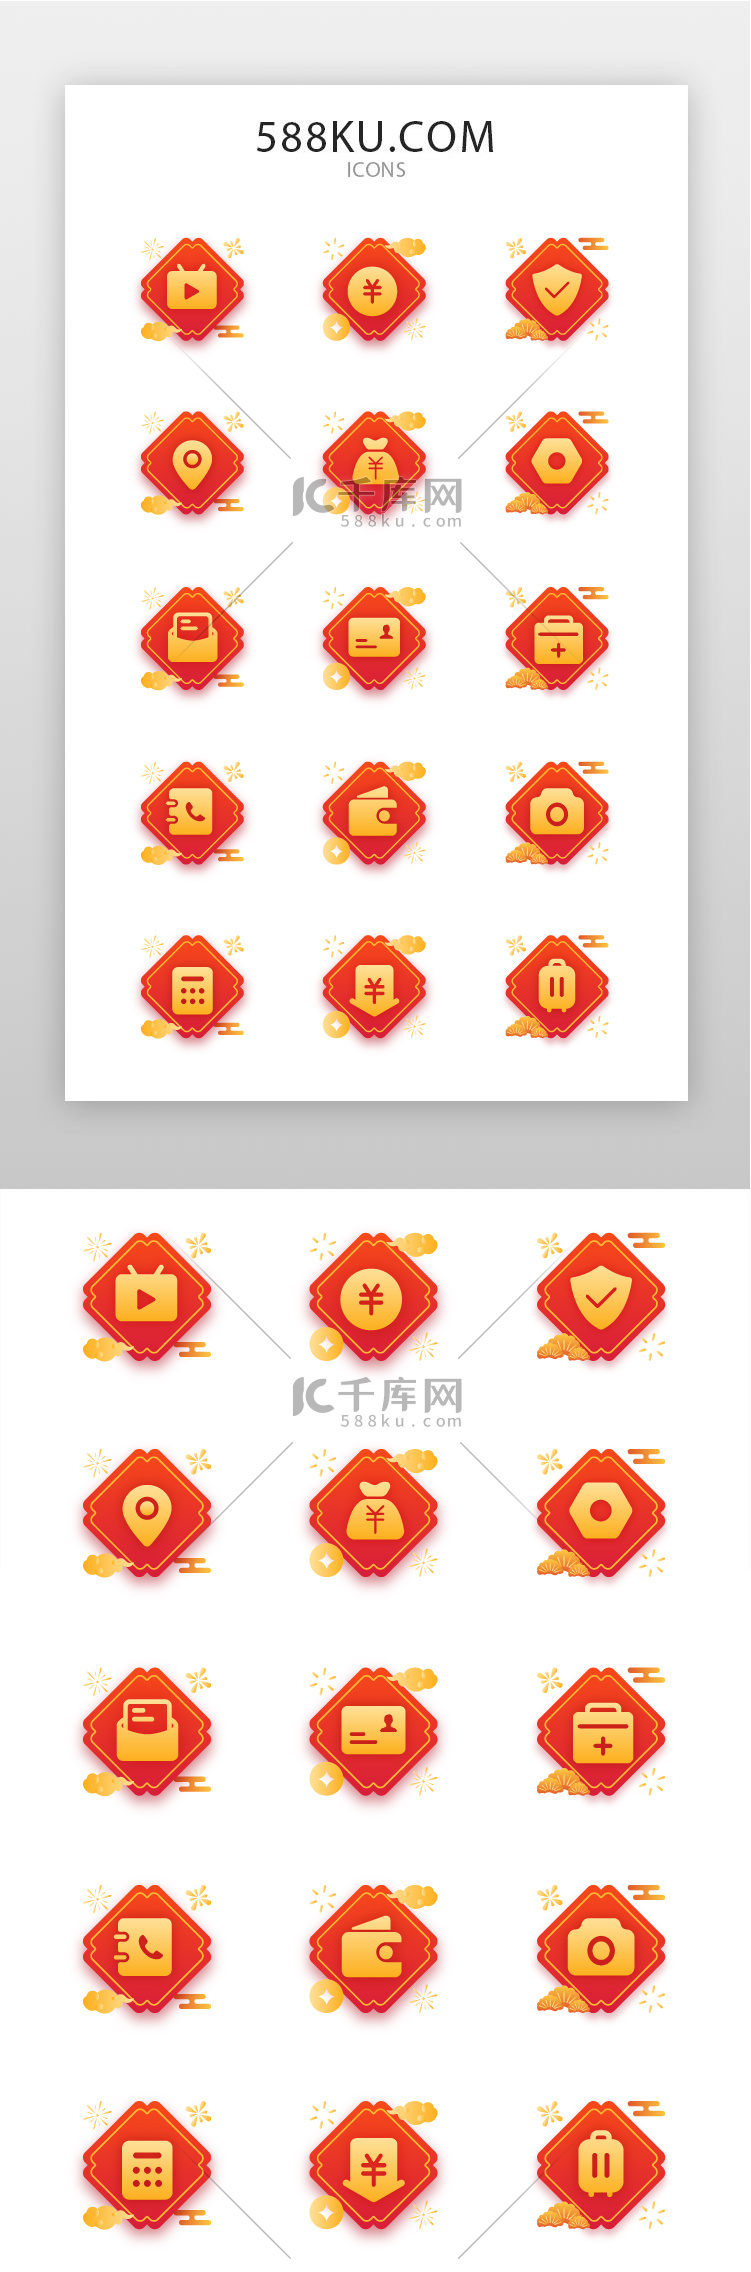 春节icon中国风红色ui图标